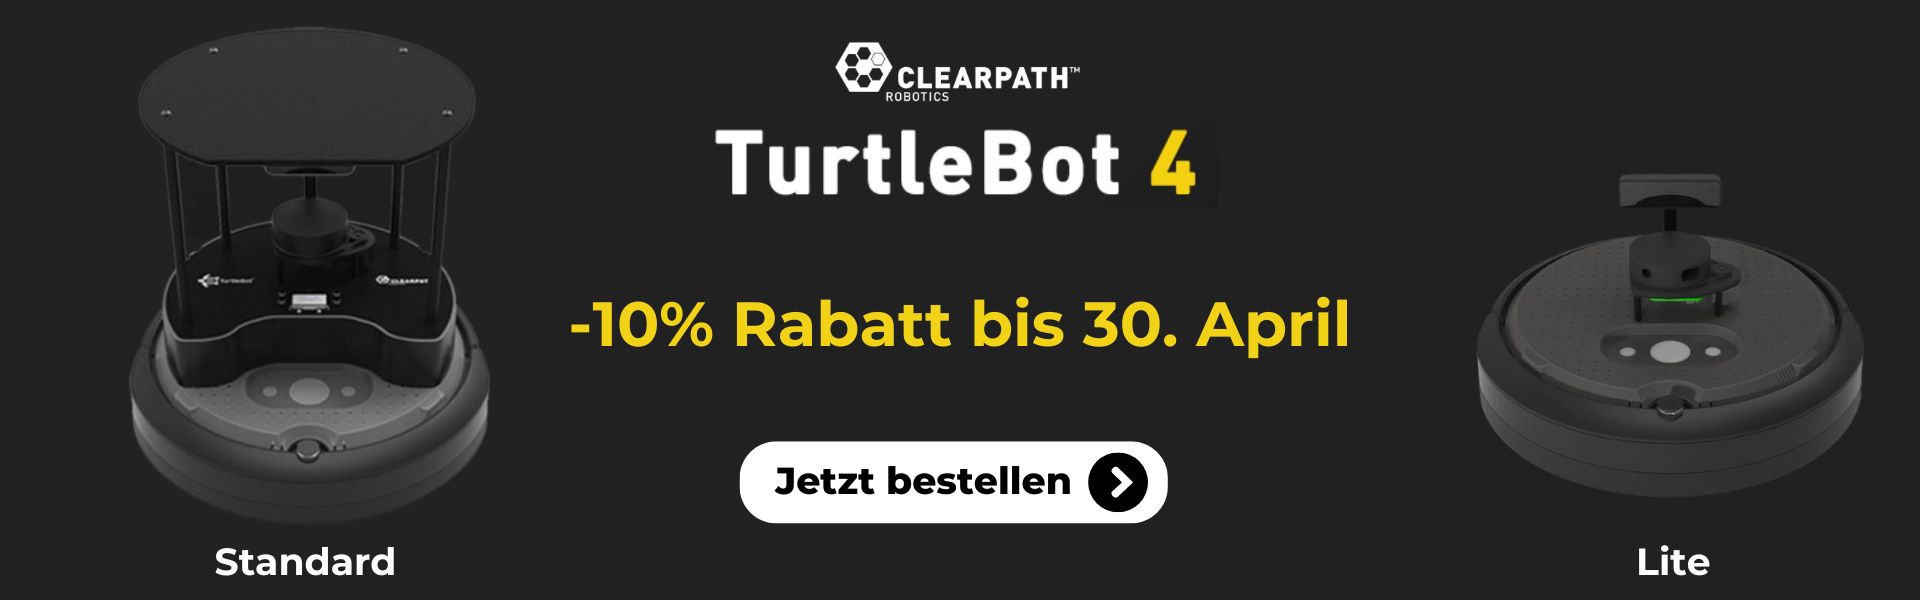 TurtleBot 4: -10% Rabatt bis 30.April